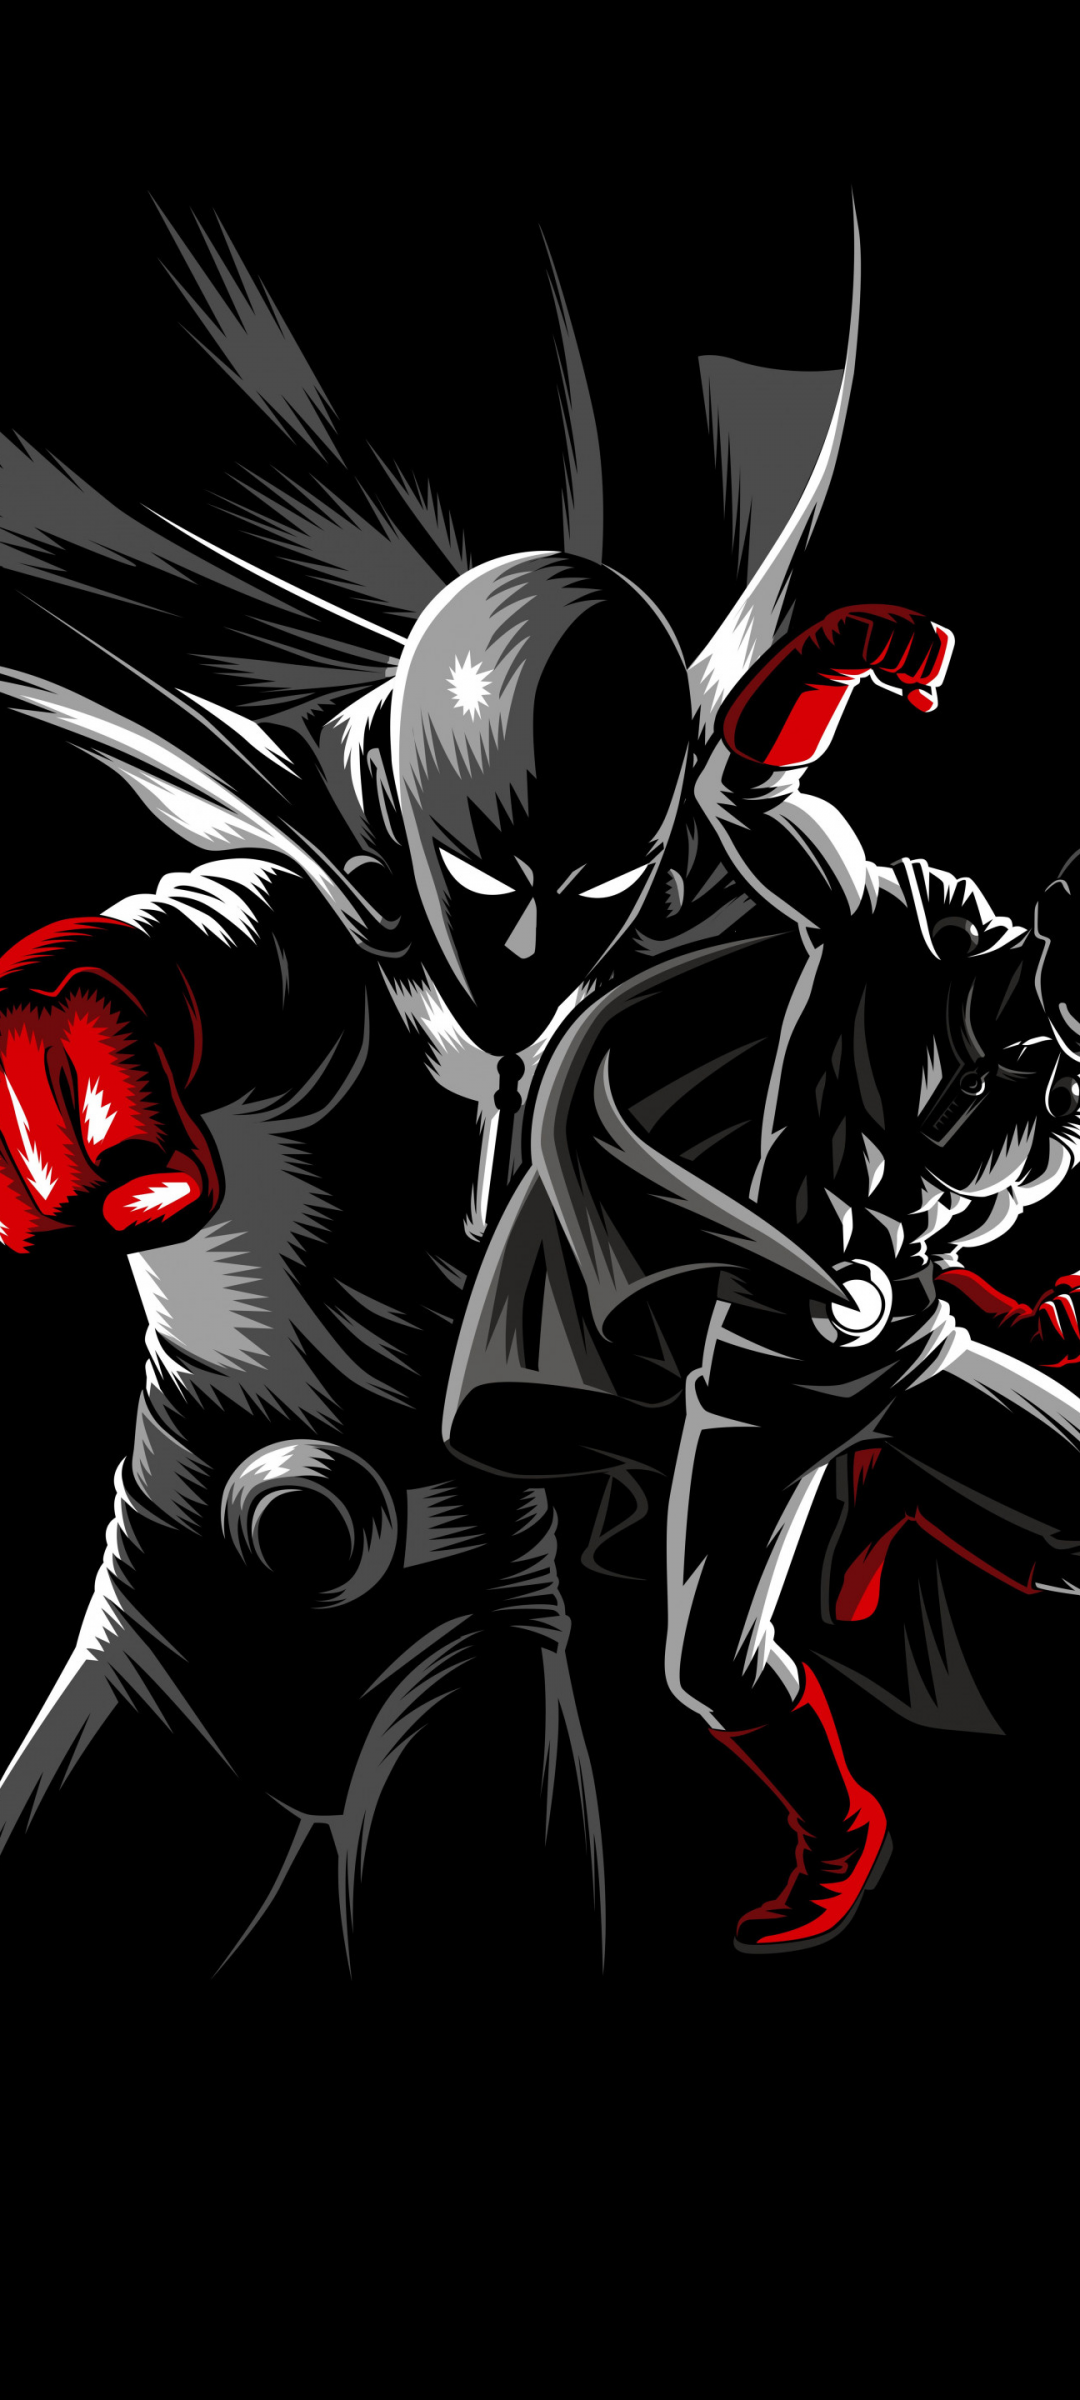 One Punch Man 4K Wallpaper, Saitama, AMOLED, Black background, 5K